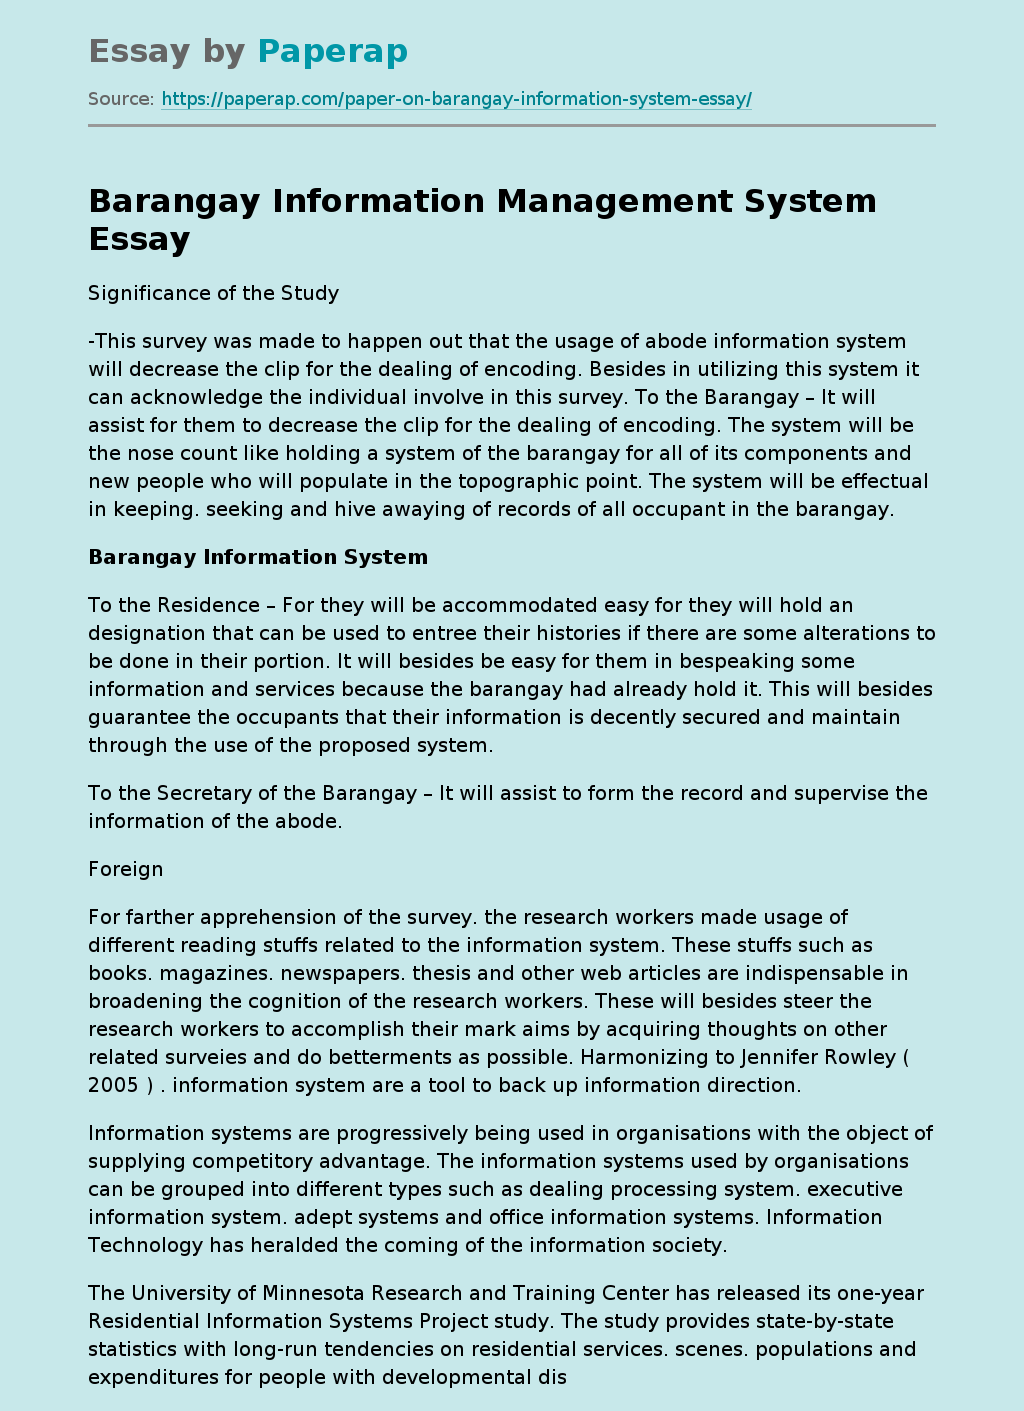 Barangay Information Management System